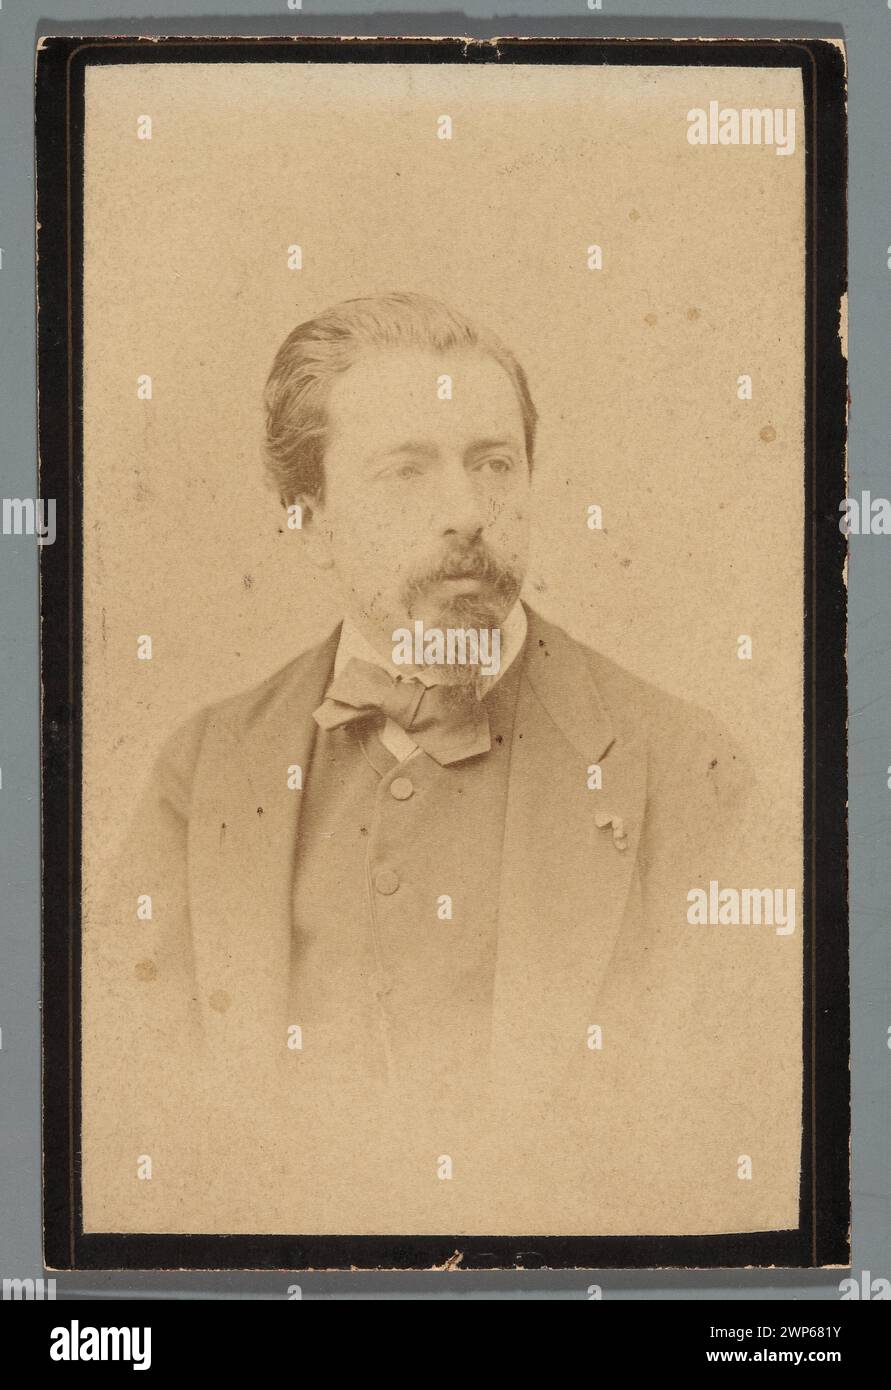 Portrait of Henryk Wieniawski (1835-1880), violinist, composer (bust); Mieczkowski, Jan (1830-1889); around 1870 (1870-00-00-1875-00-00);Rajchman, Aleksander (1855-1915)-collection, Wieniawski, Henryk (1835-1880), Wieniawski, Henryk (1835-1880)-iconography, composers, musicians, portraits, men's portraits, violinist Stock Photo